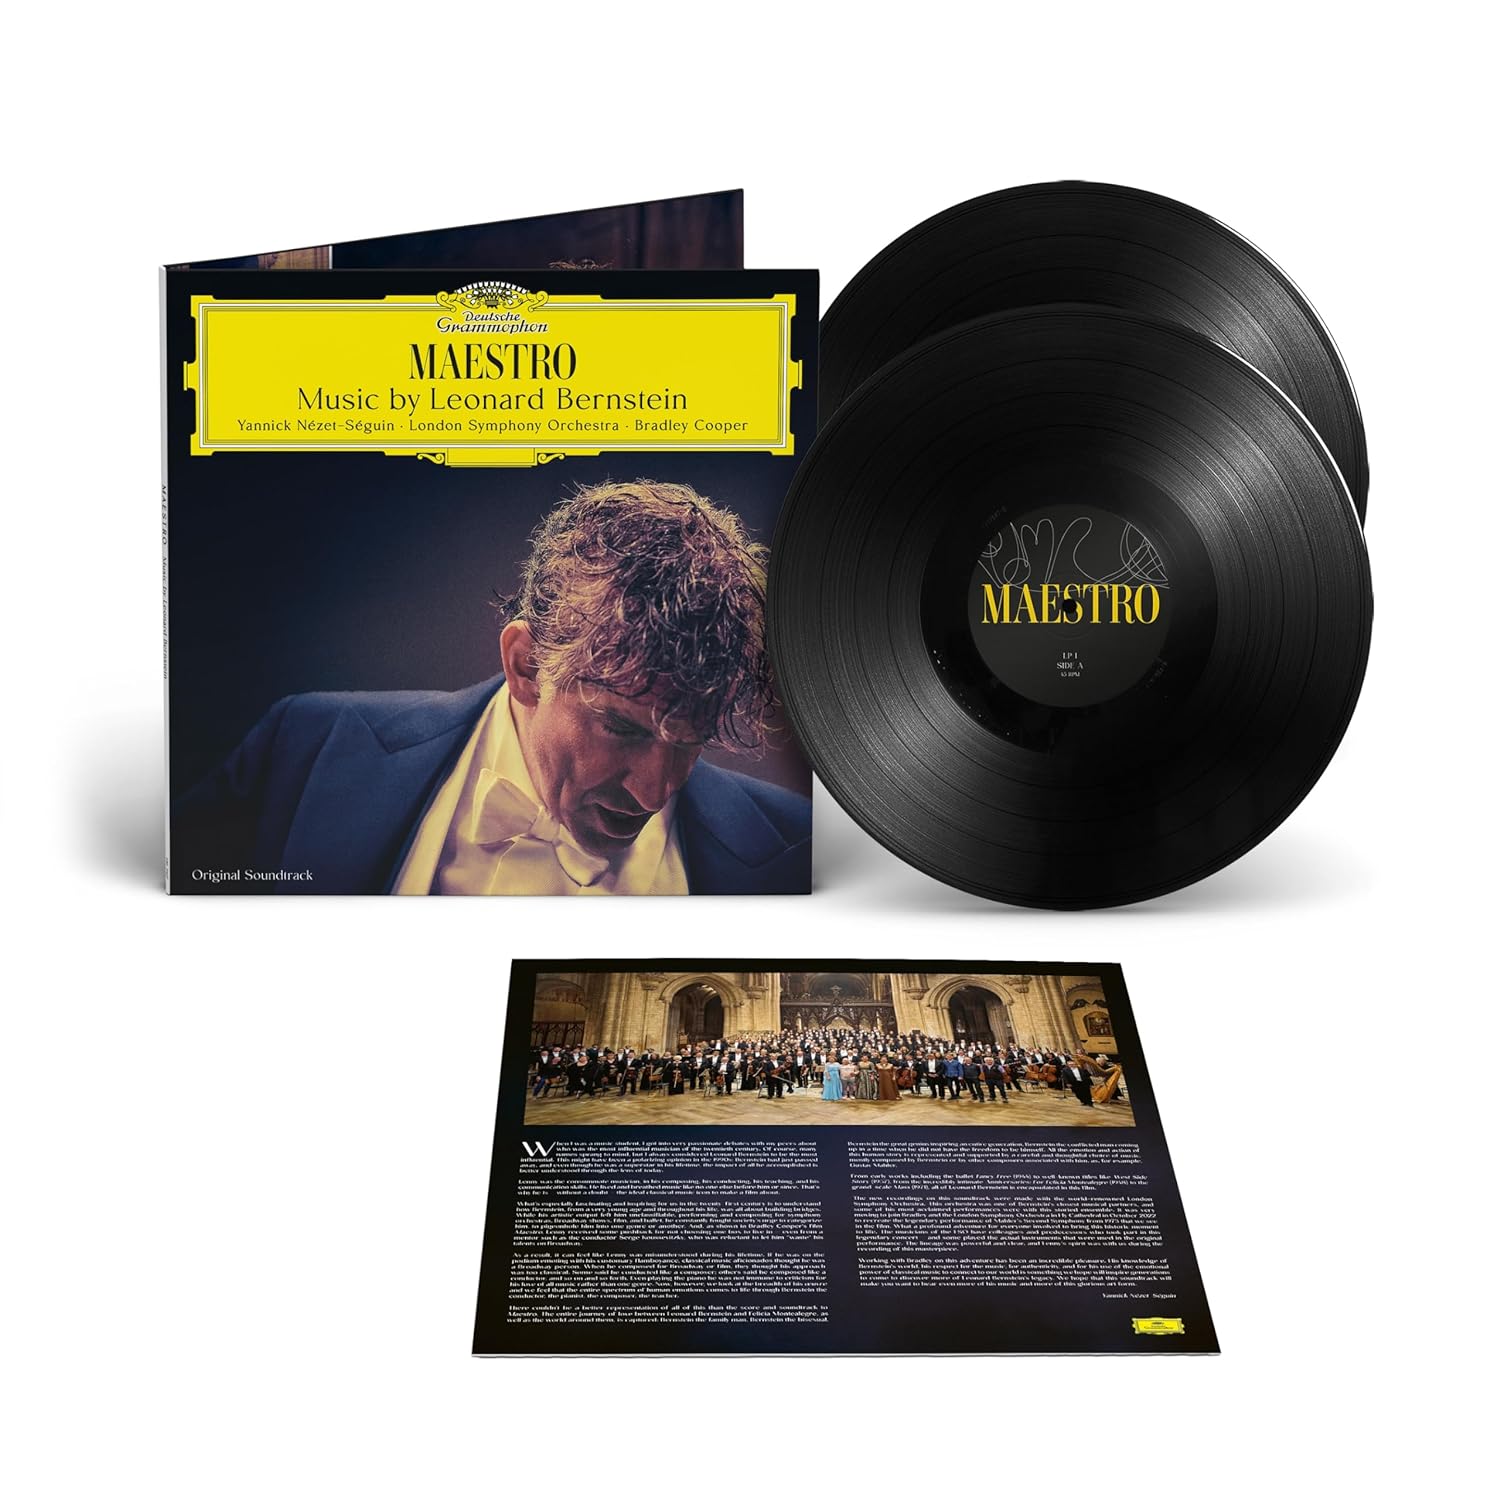 Yannick Nézet-Séguin / London Symphony Orchestra / Bradley Cooper - Maestro: Music By Leonard Bernstein